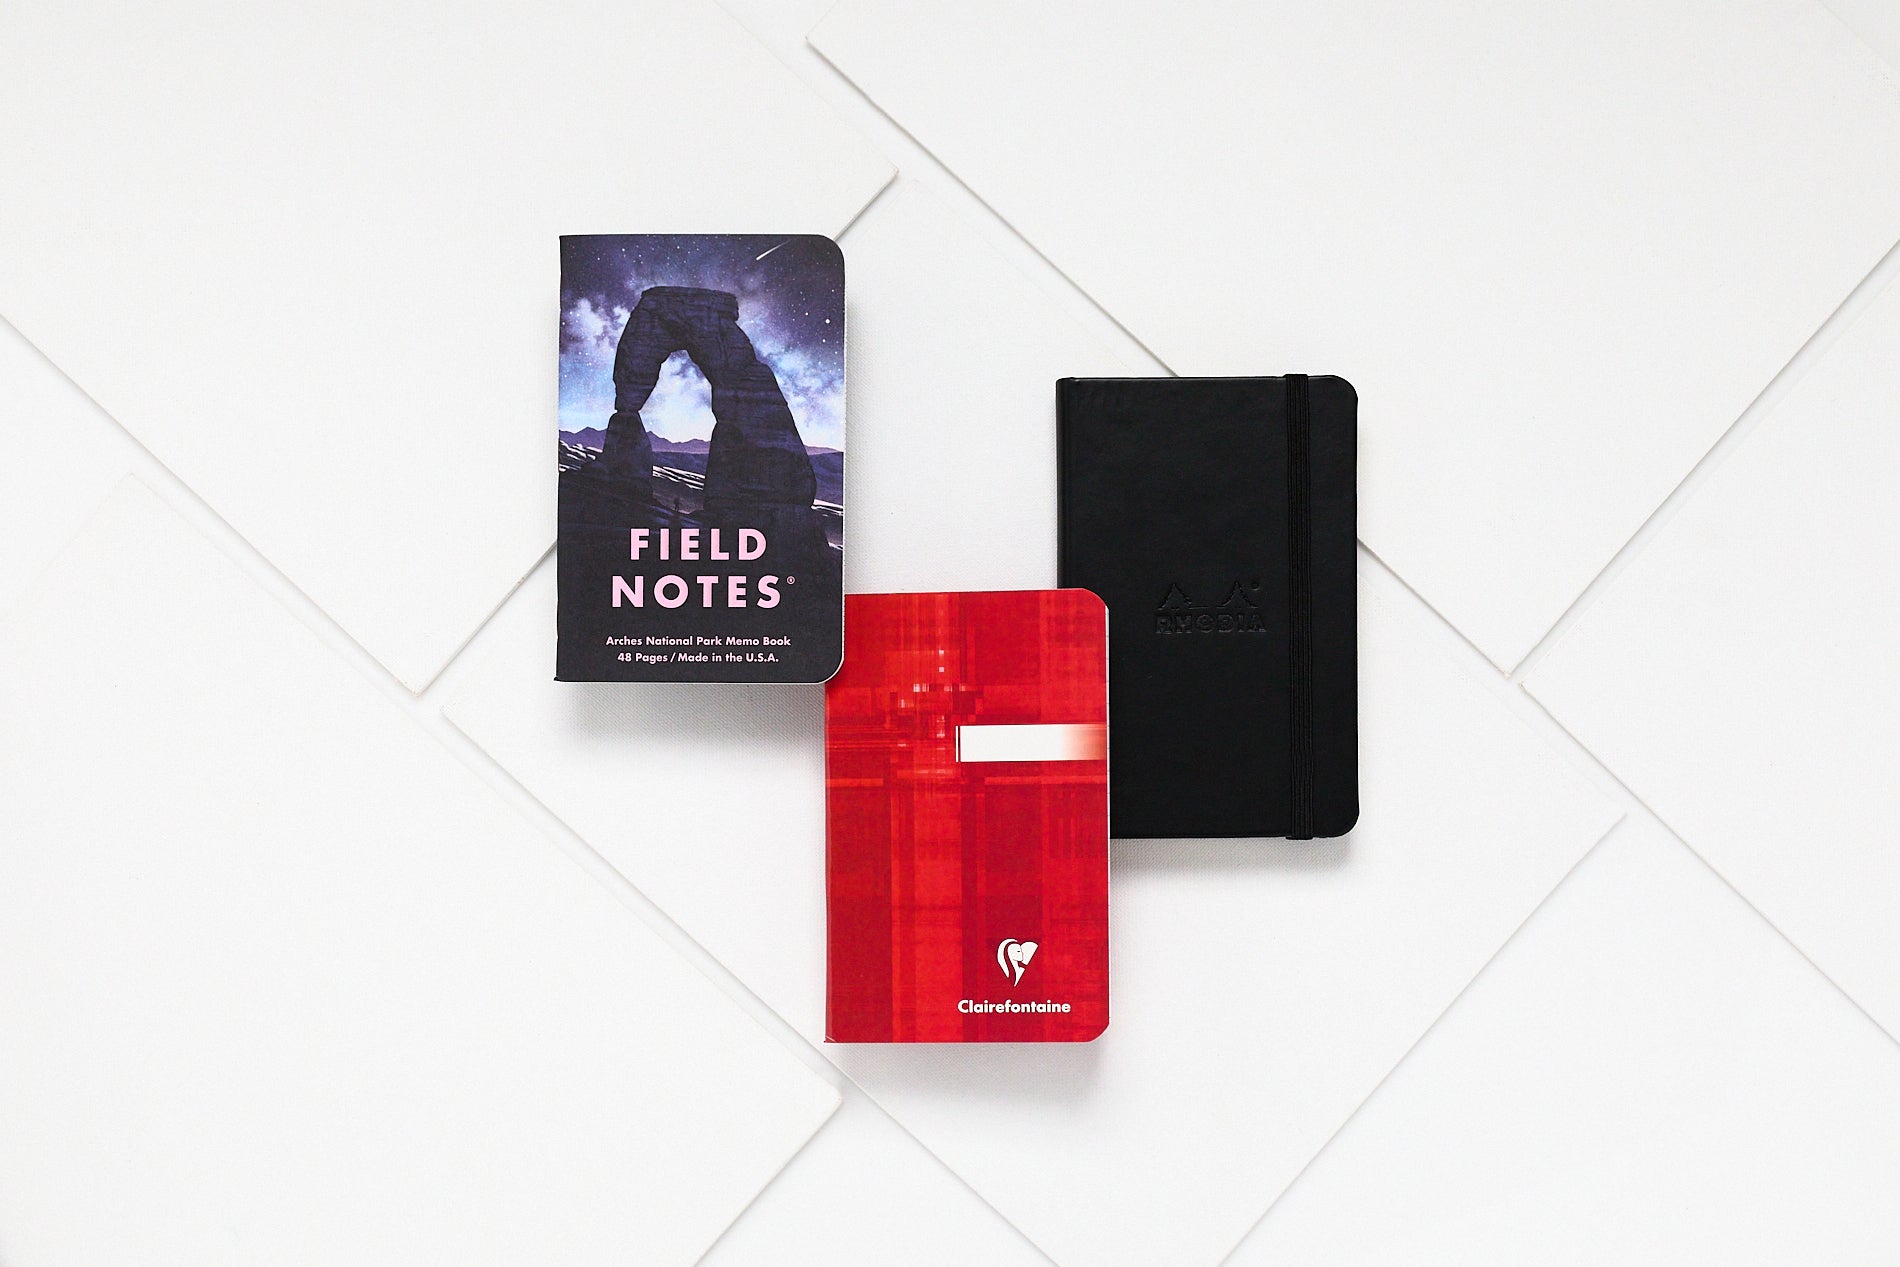 Pocket sized notebooks